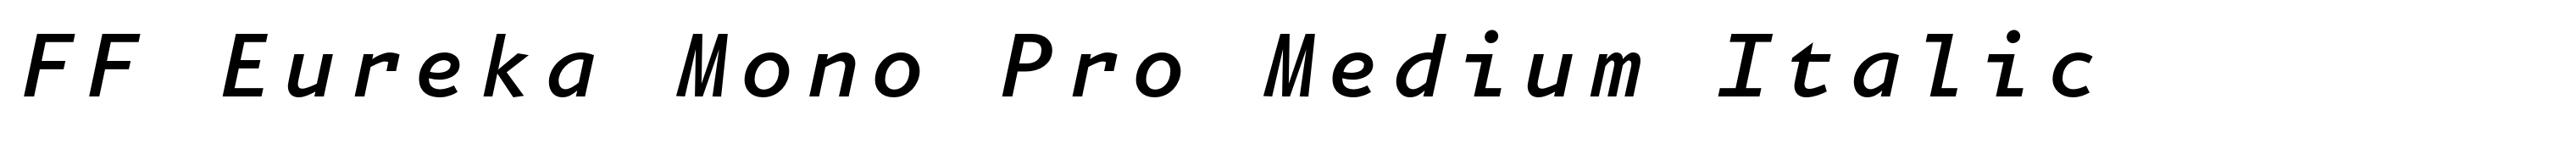 FF Eureka Mono Pro Medium Italic